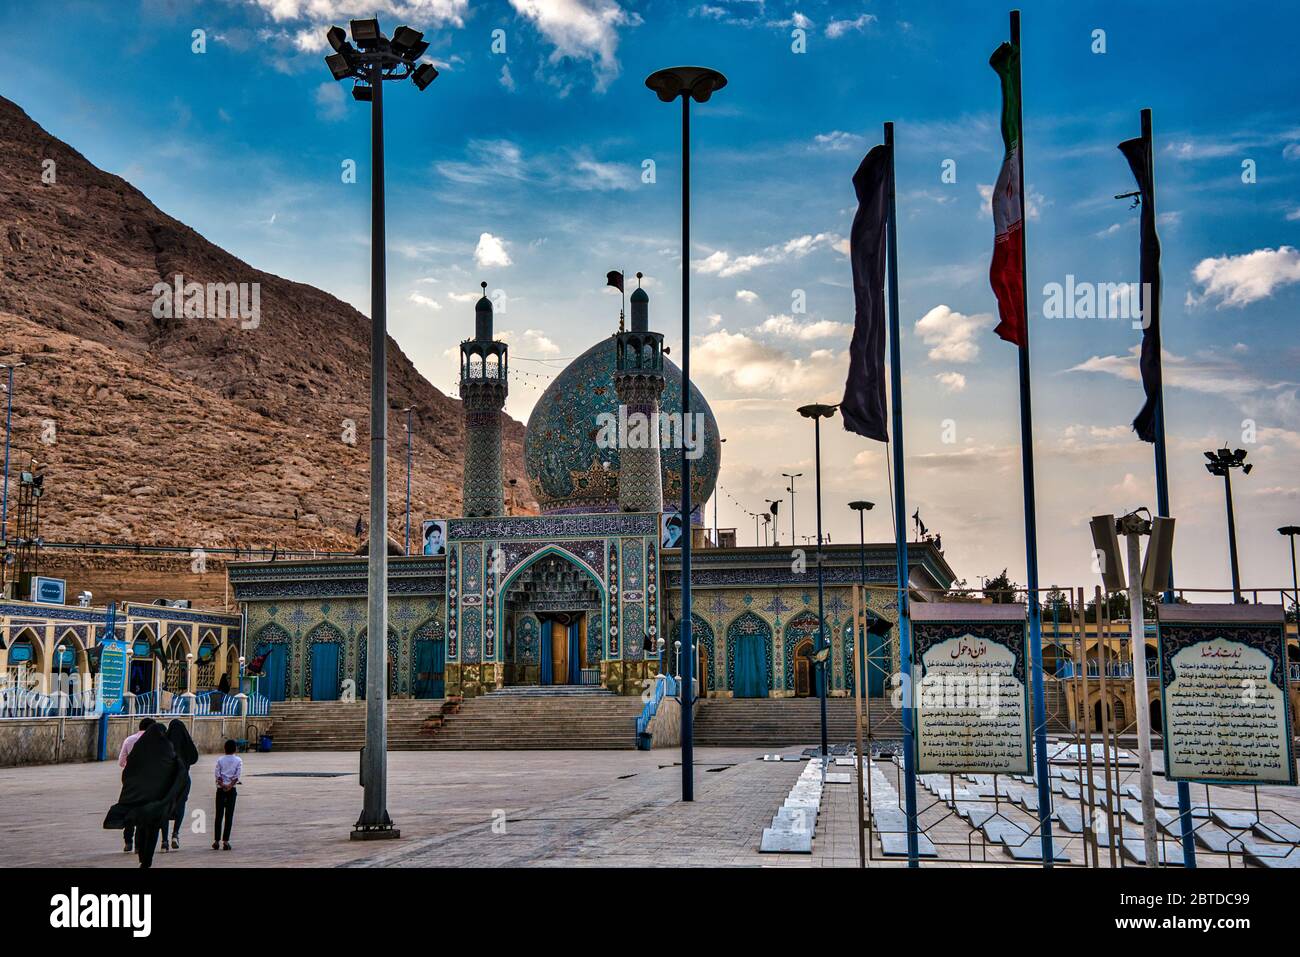 Tombs of iranian martyrs of the war against Iraq, Haj Hemmat in Imamzadeh shrine in the town of Shahreza, Fars province, Iran Stock Photo